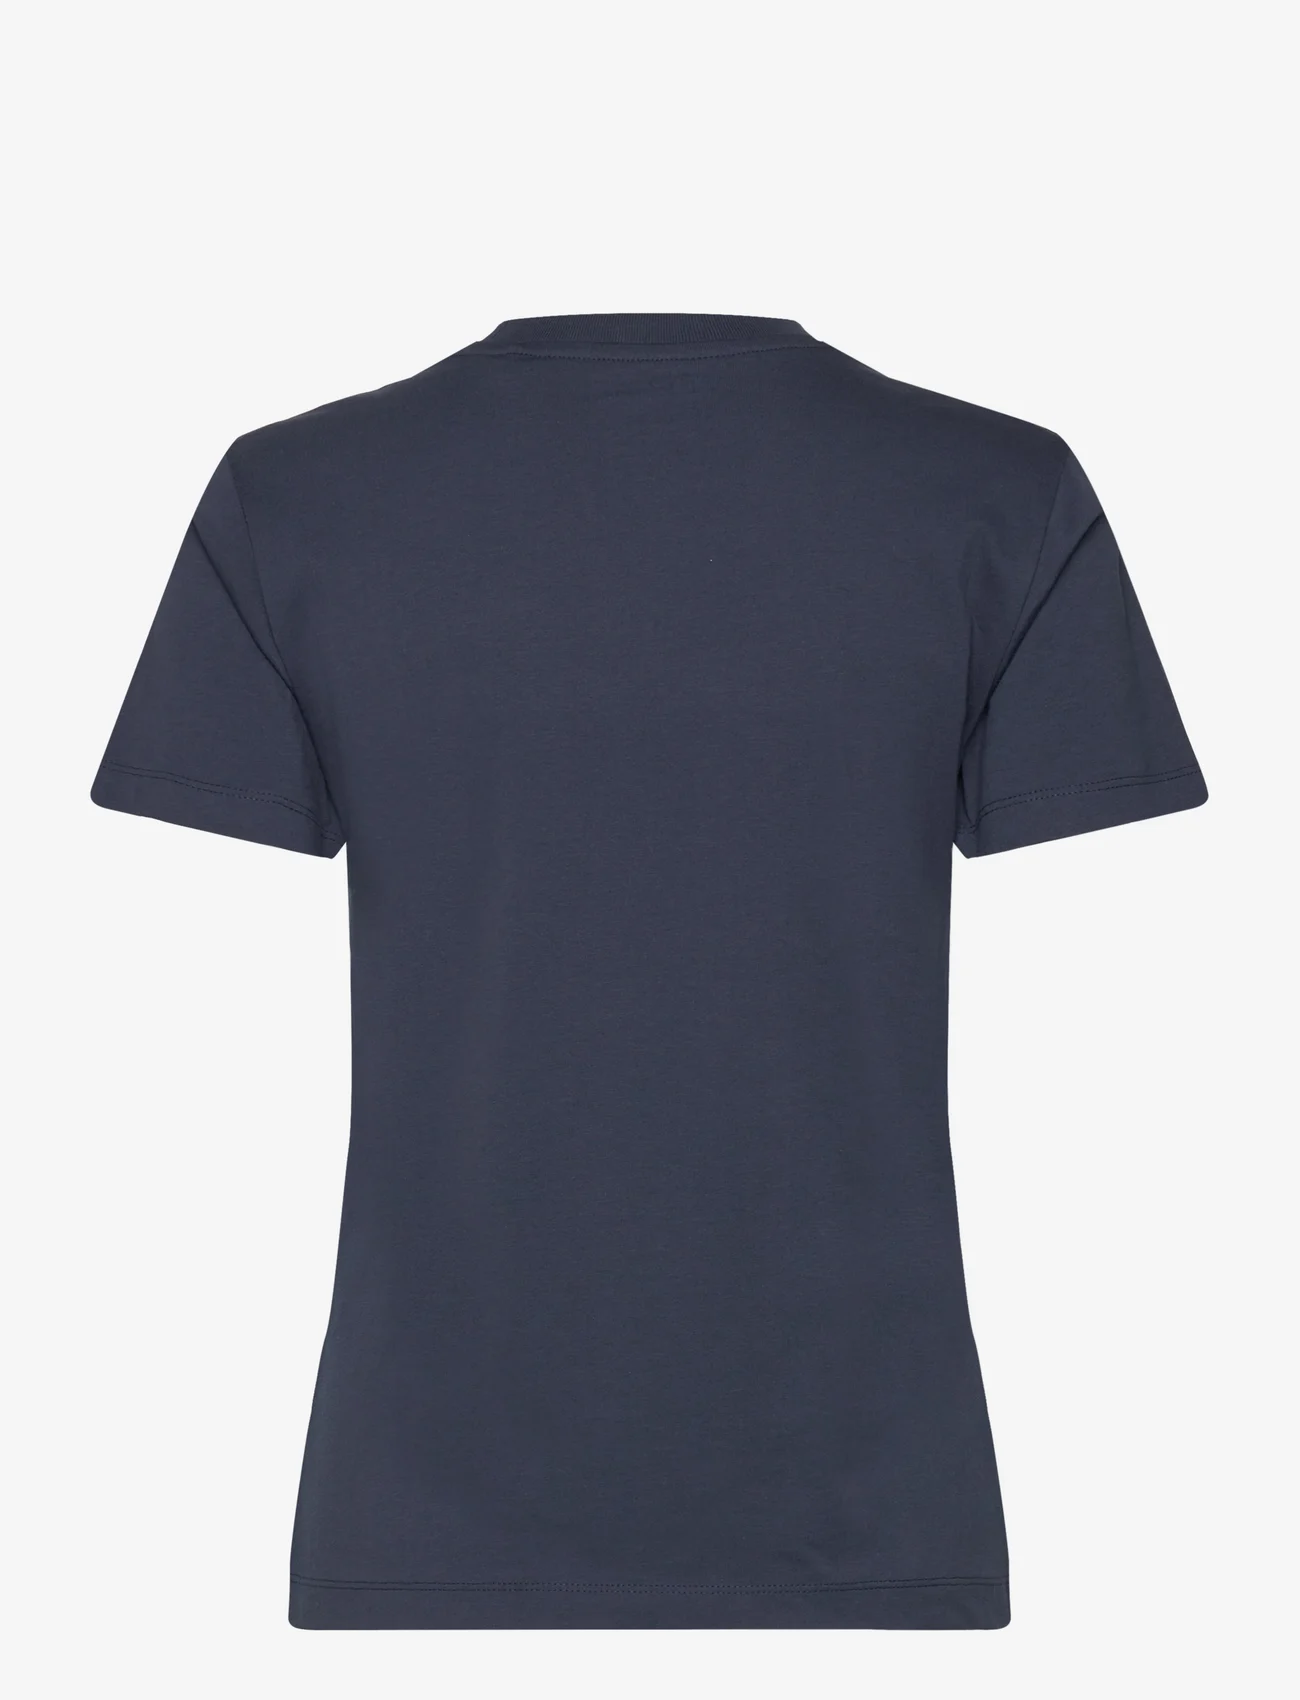 Jack Wolfskin - ESSENTIAL T W - t-shirts - night blue - 1